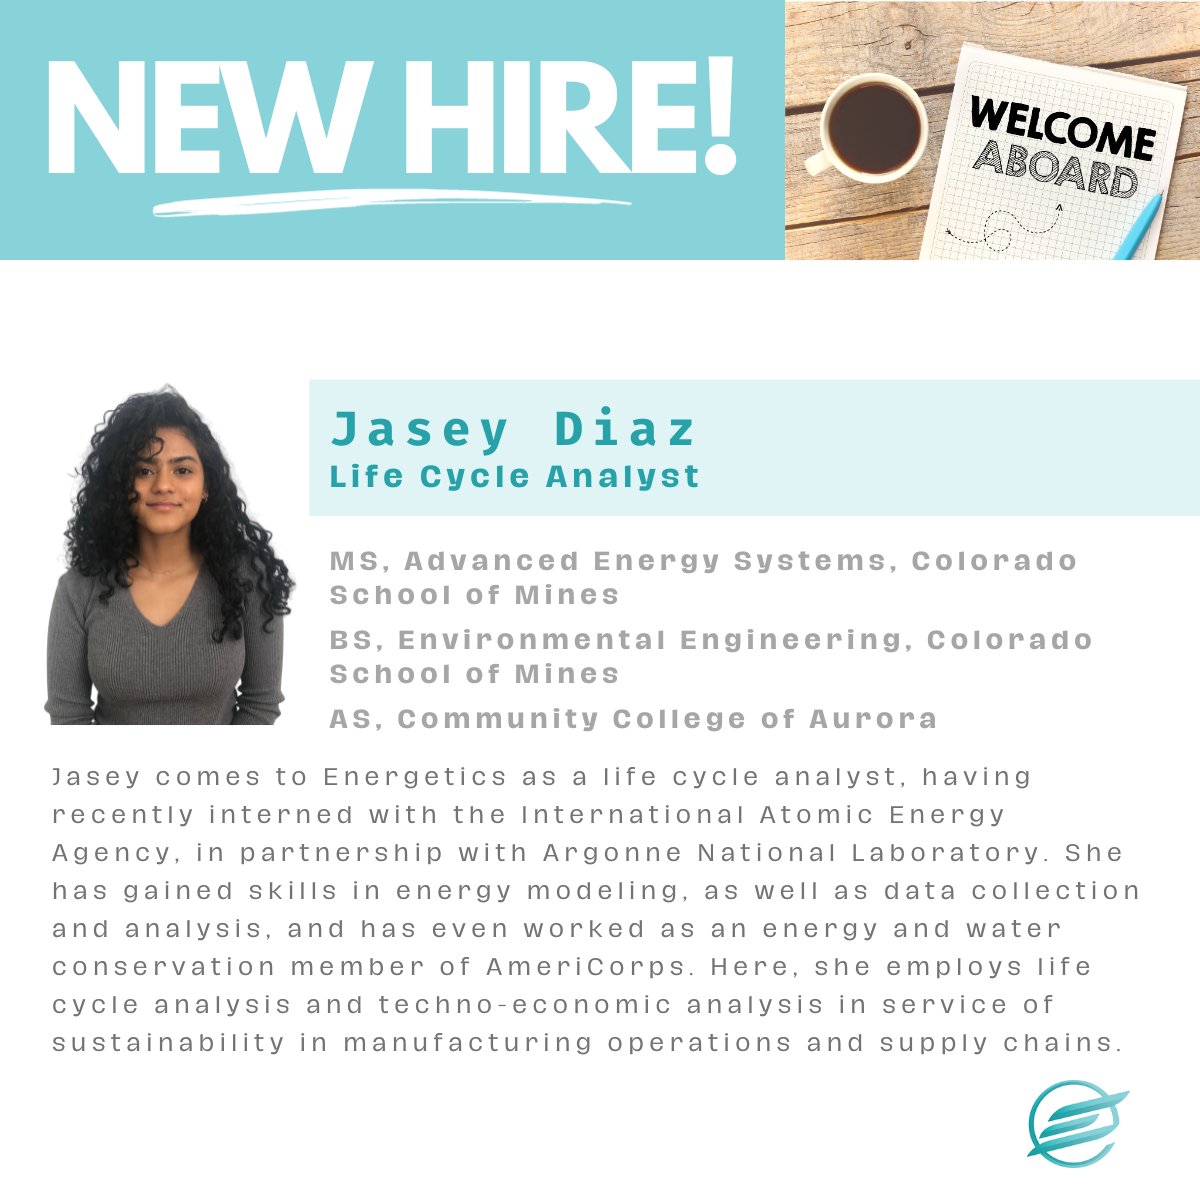 Welcome, Jasey Diaz! #Sustainability #DataAnalysis #EnergySystems #EnvironmentalEngineering #LCA #TEA